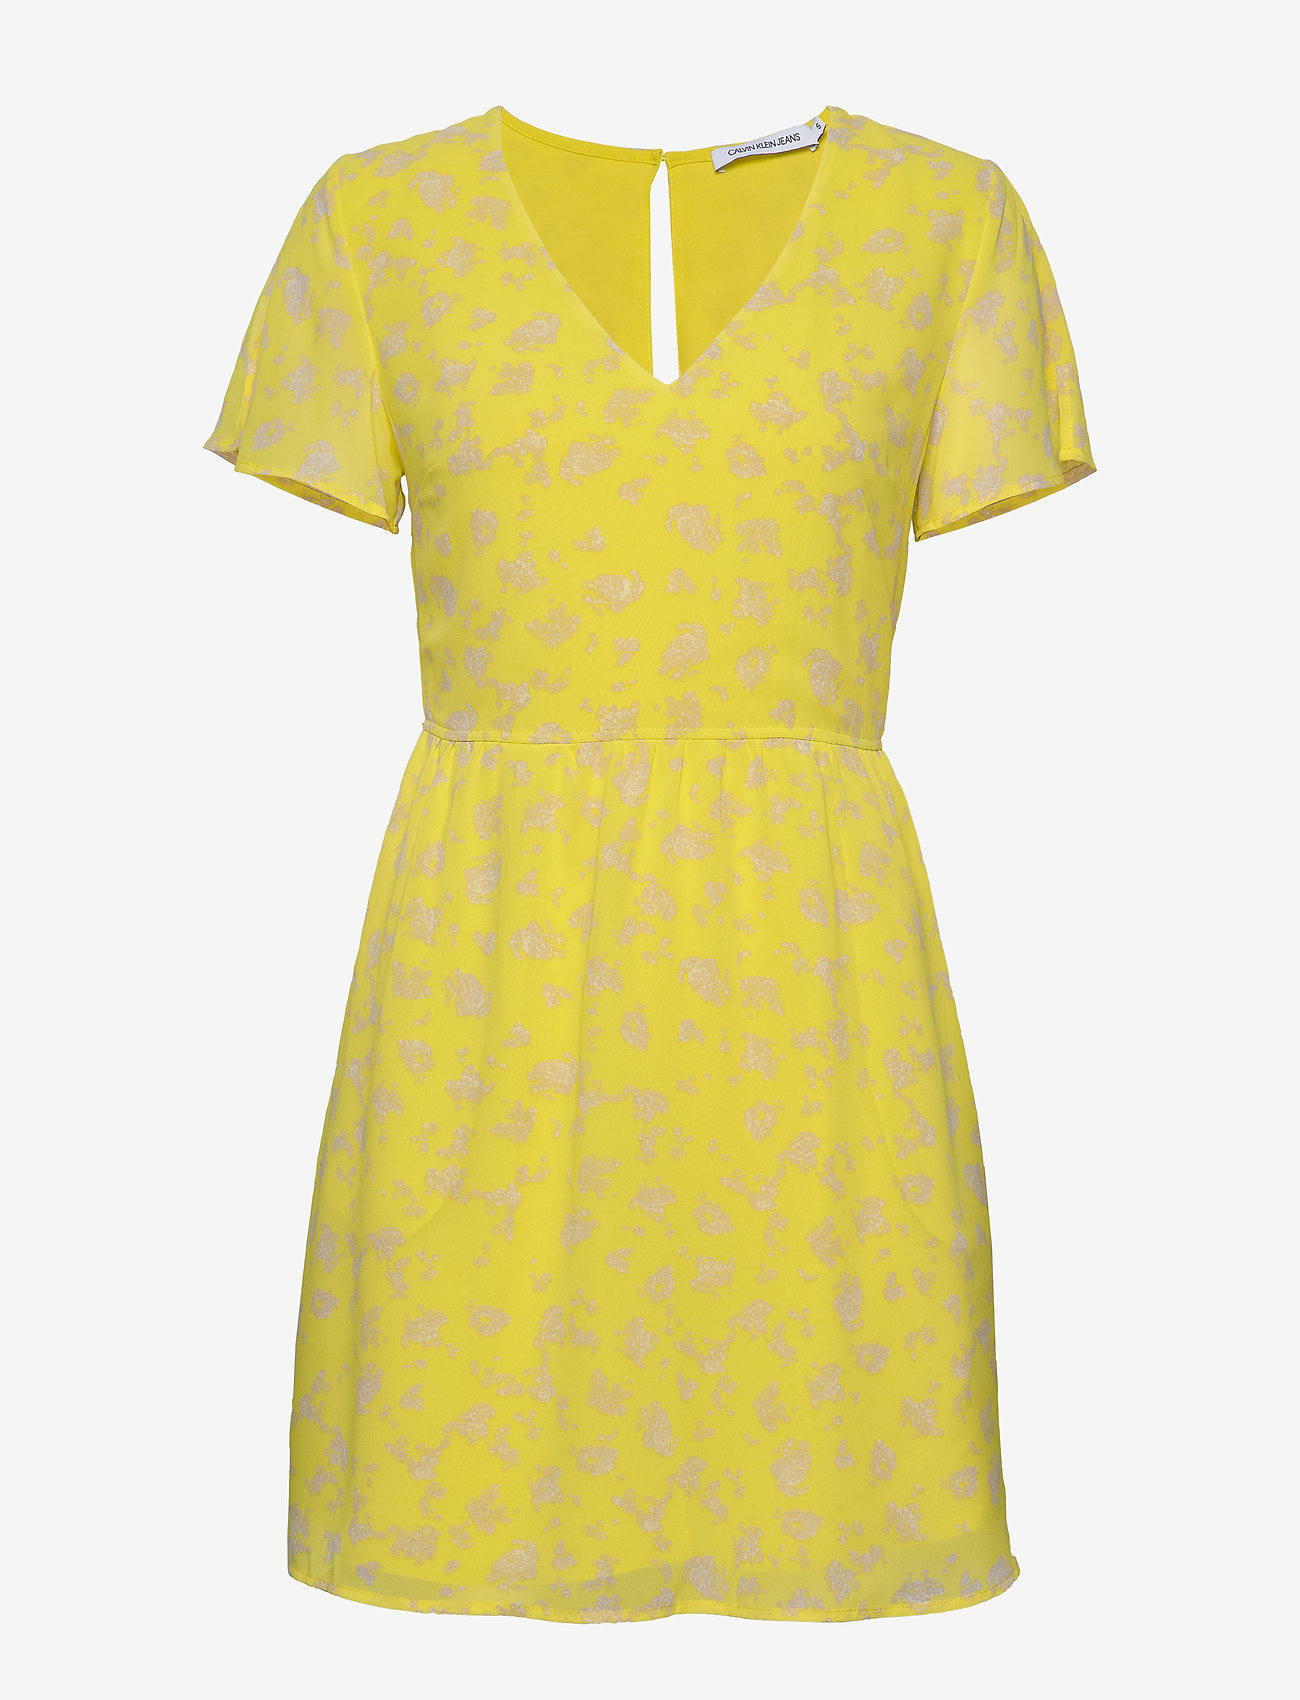 calvin klein yellow dresses